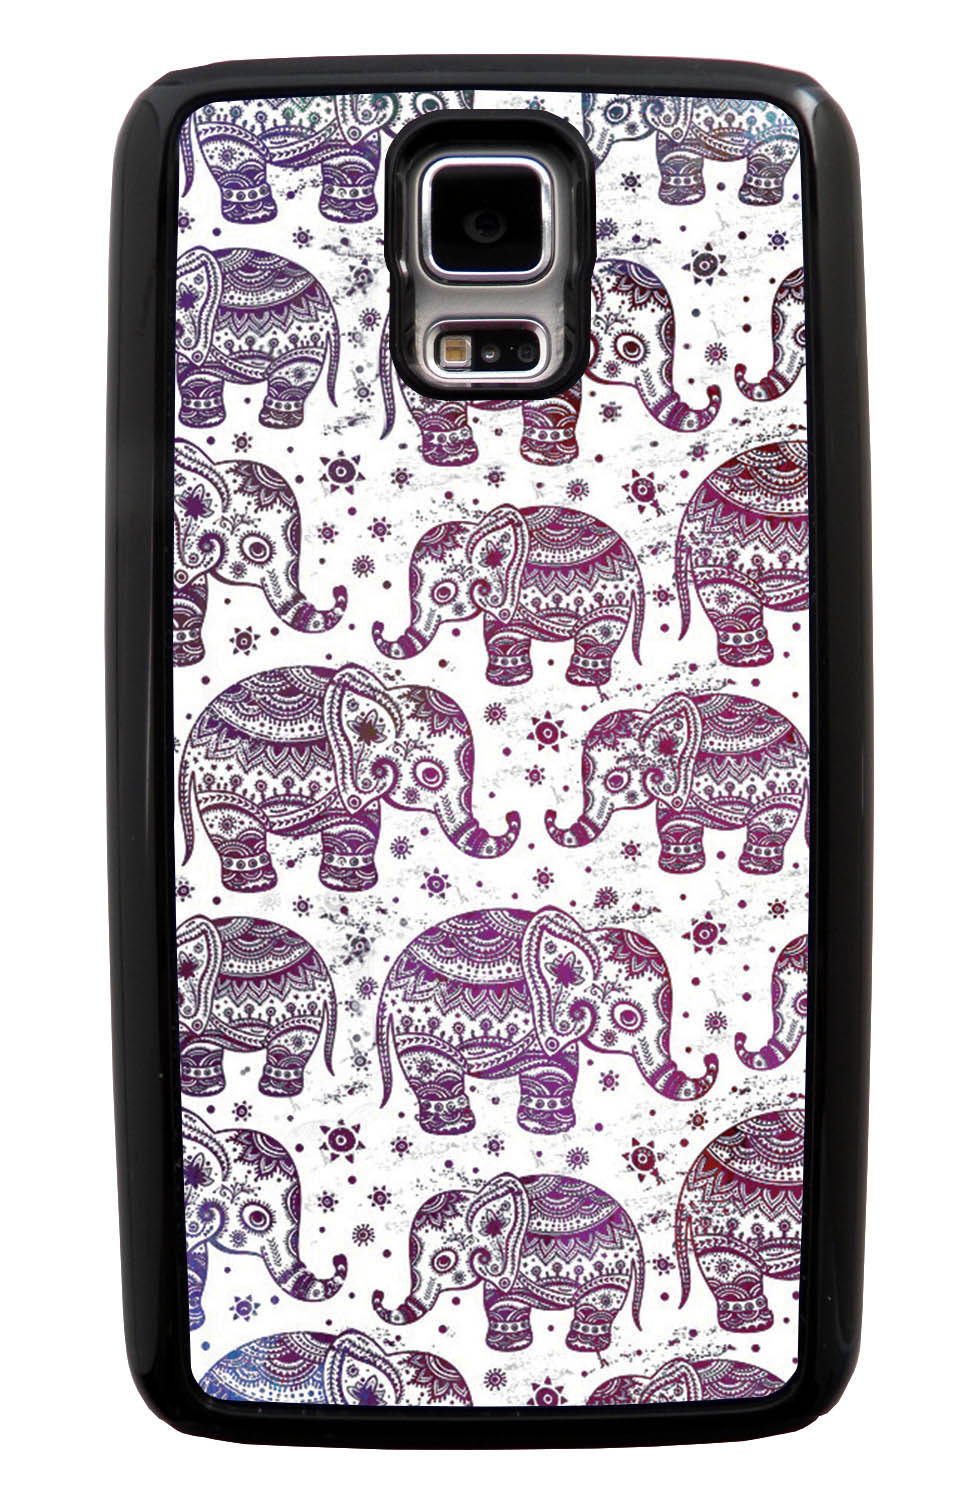 Samsung Galaxy S5 / SV Aztec Case - Sun Sparkled Neon Lights Purple on White - Tribal Elephant - Black Tough Hybrid Case